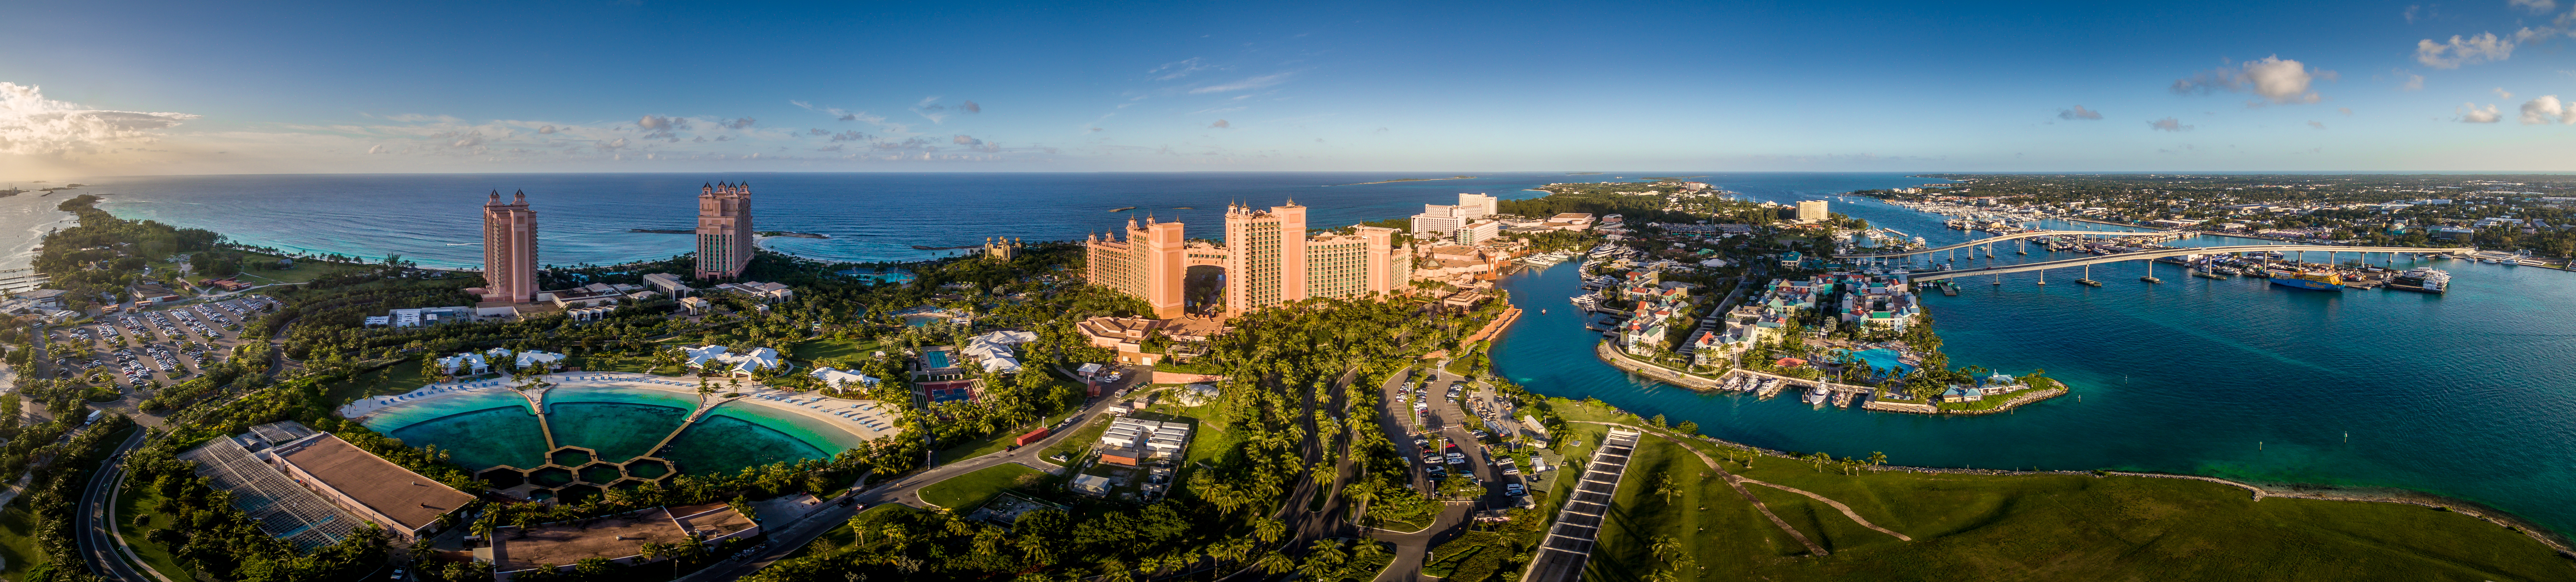 Atlantis Hotel on Paradise Island Nassau Bahamas Aerial Panorama